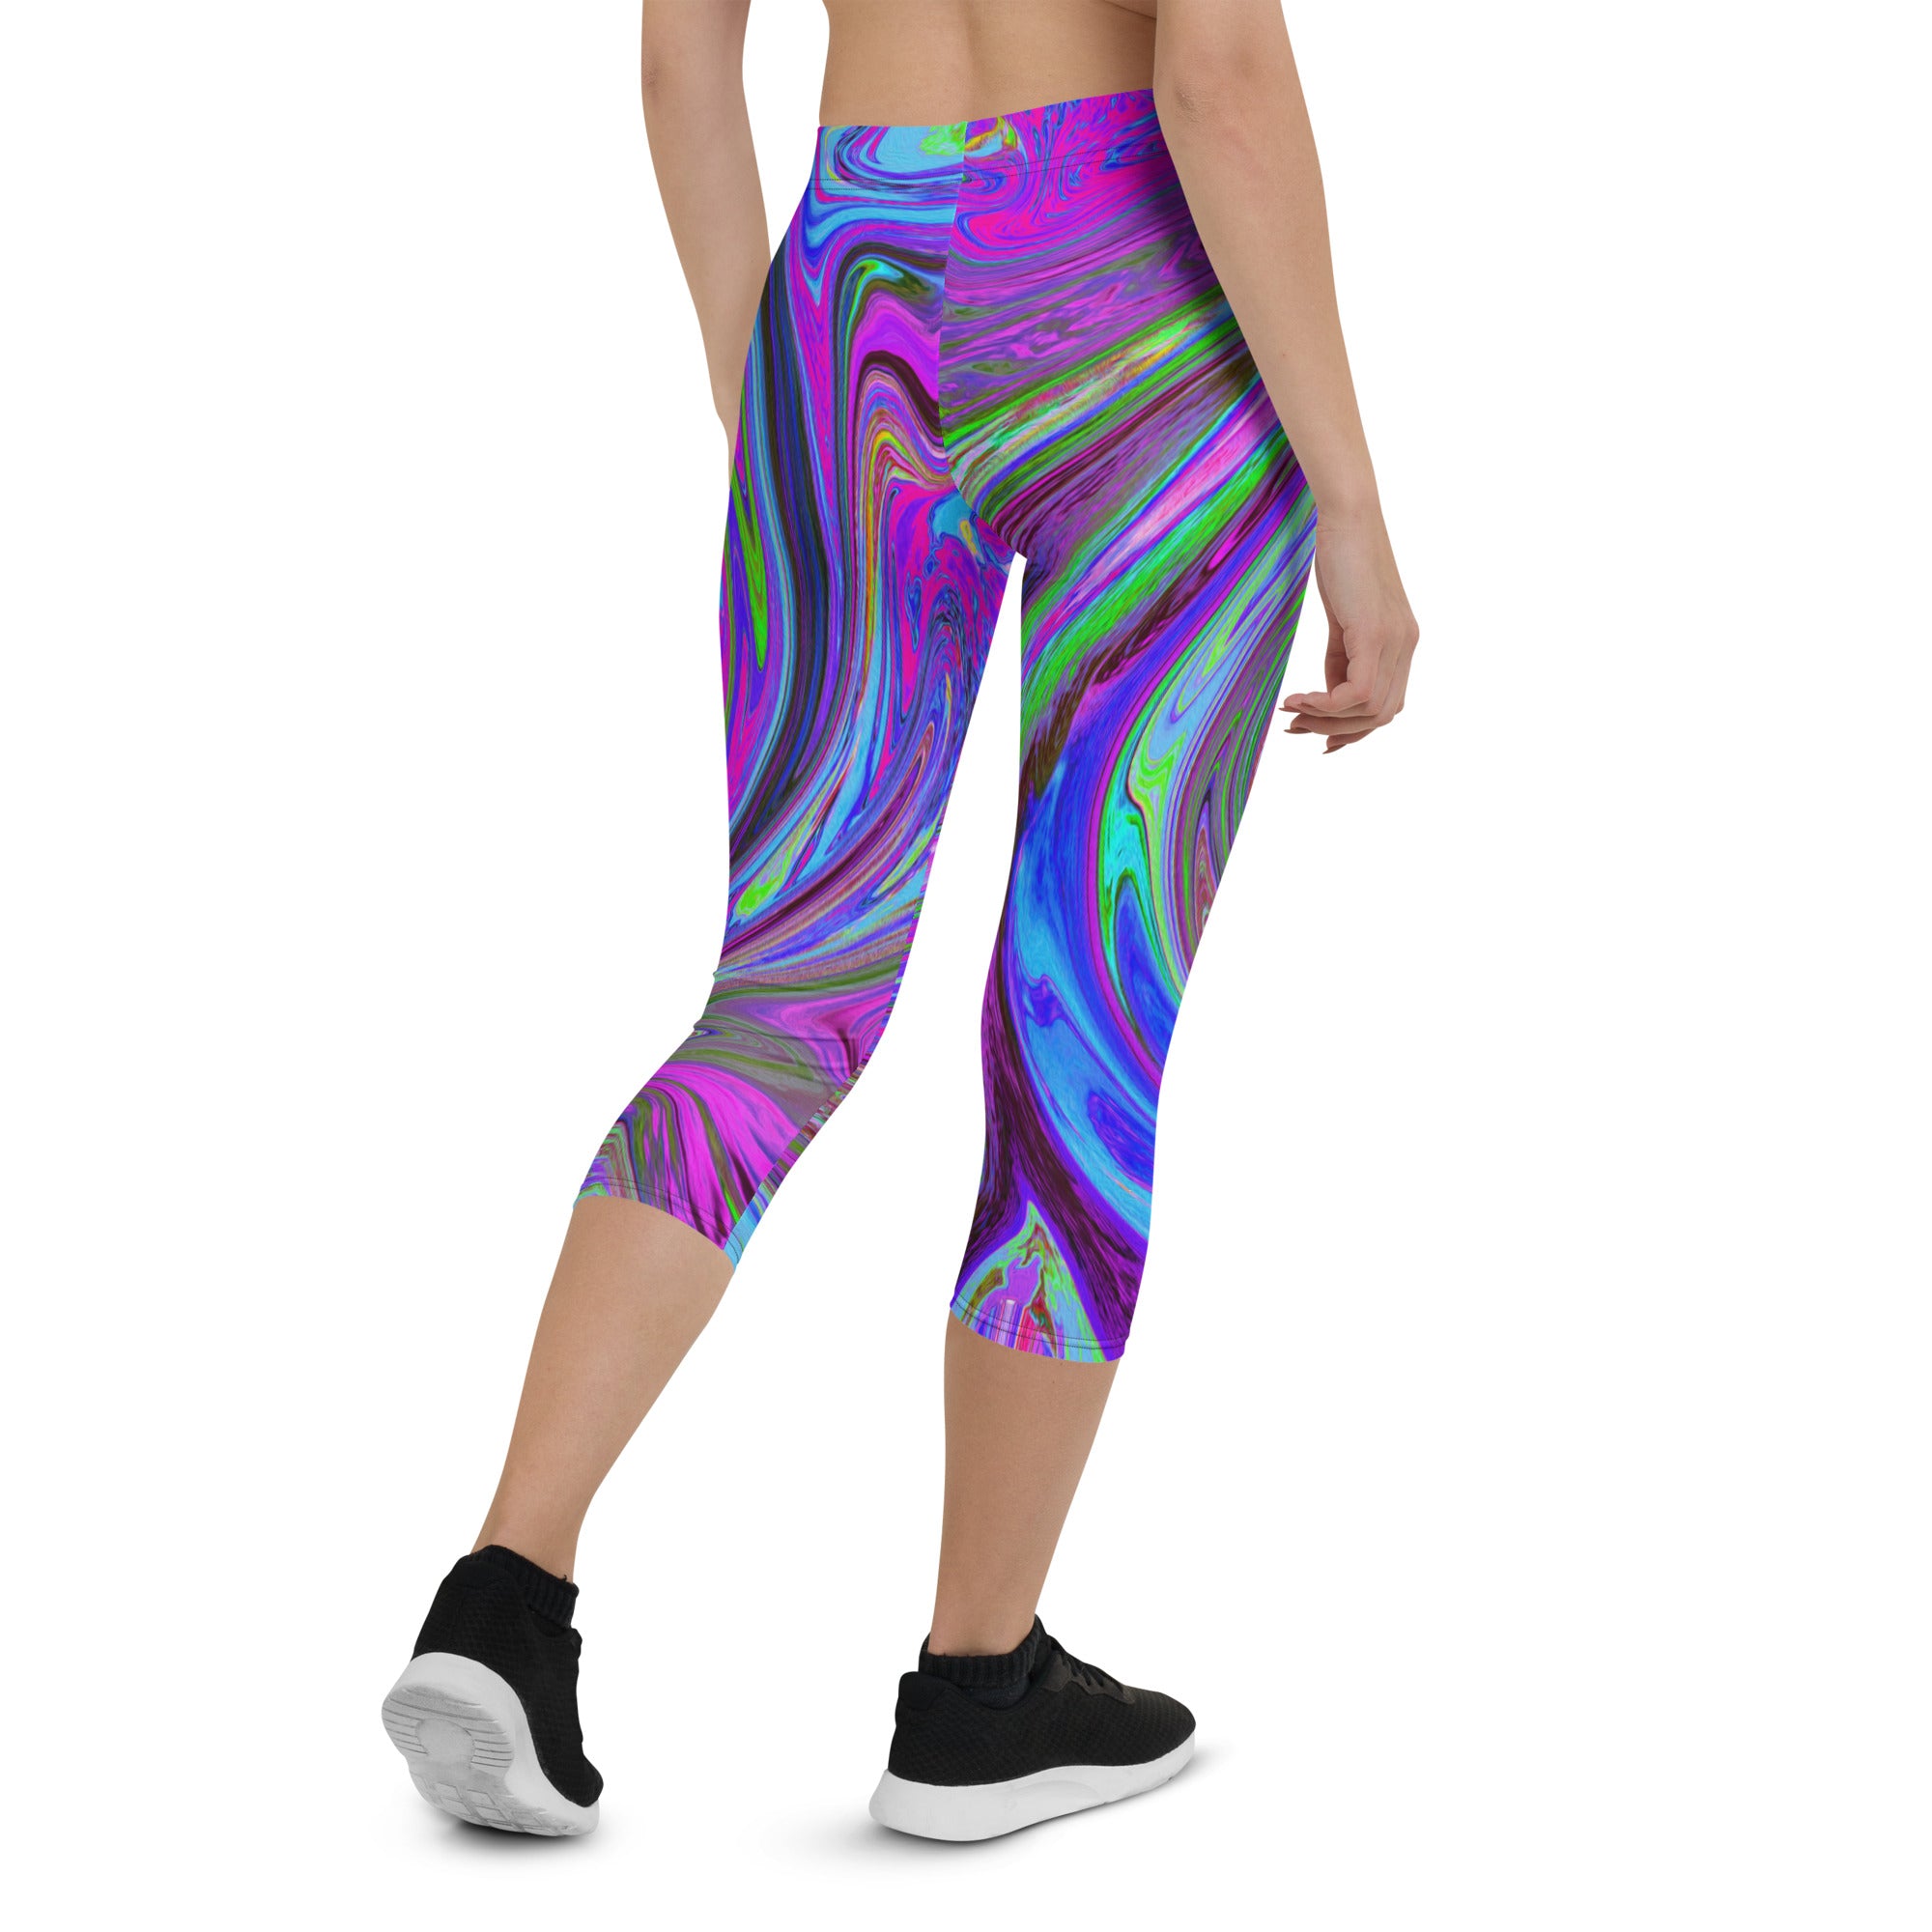 Capri Leggings for Women, Colorful Magenta Swirl Retro Abstract Design